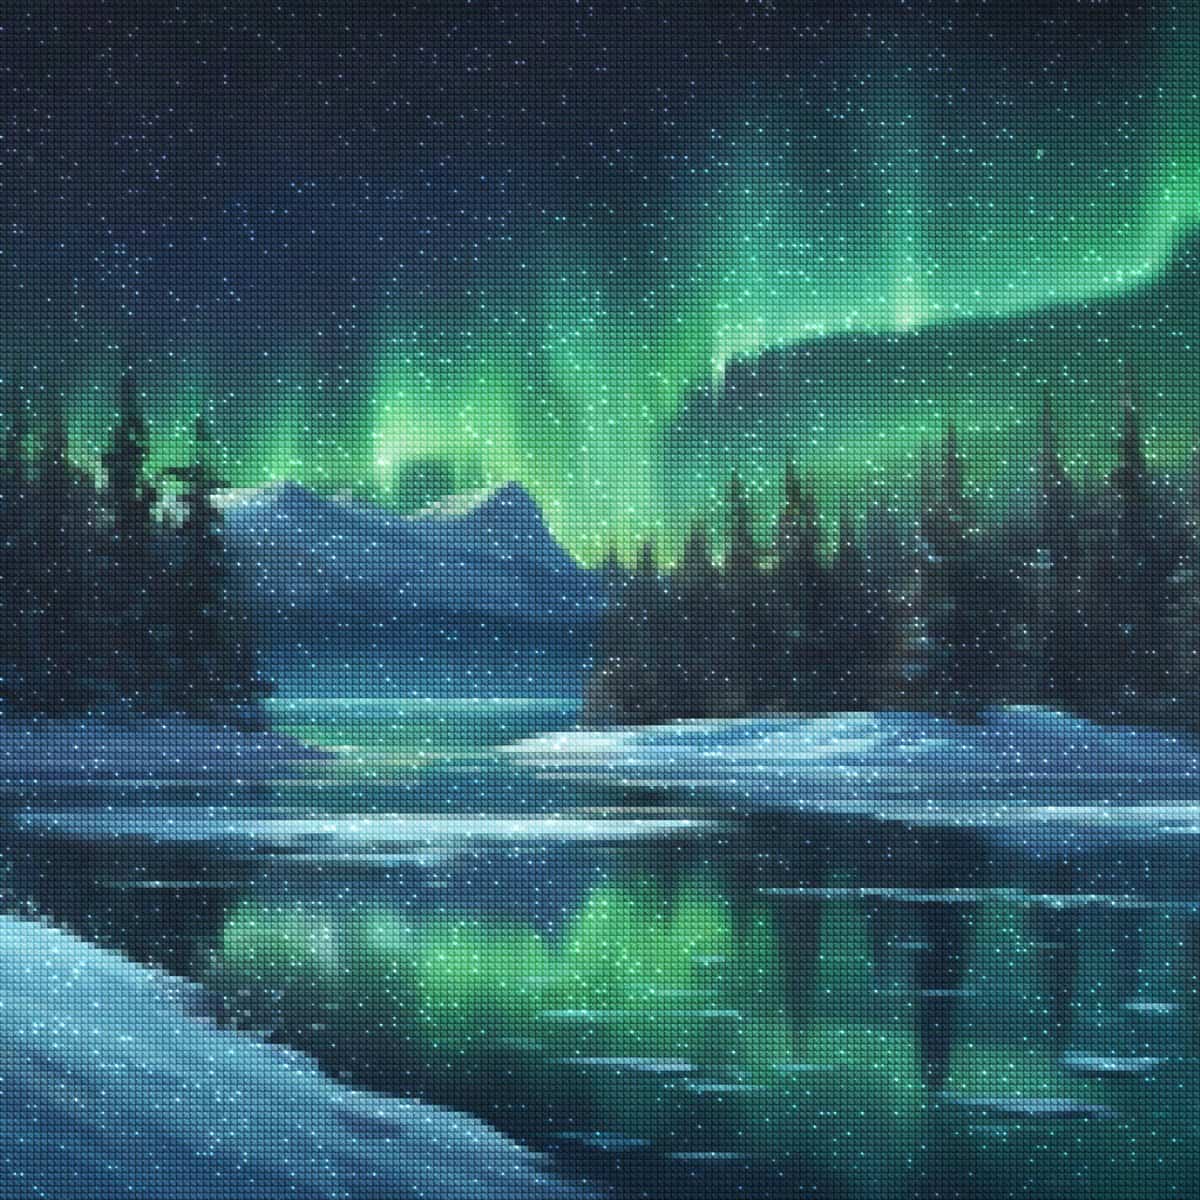 diamanti-mago-kit-pittura-diamante-paesaggio-aurora boreale-crepuscolo-spettro-diamonds.jpg